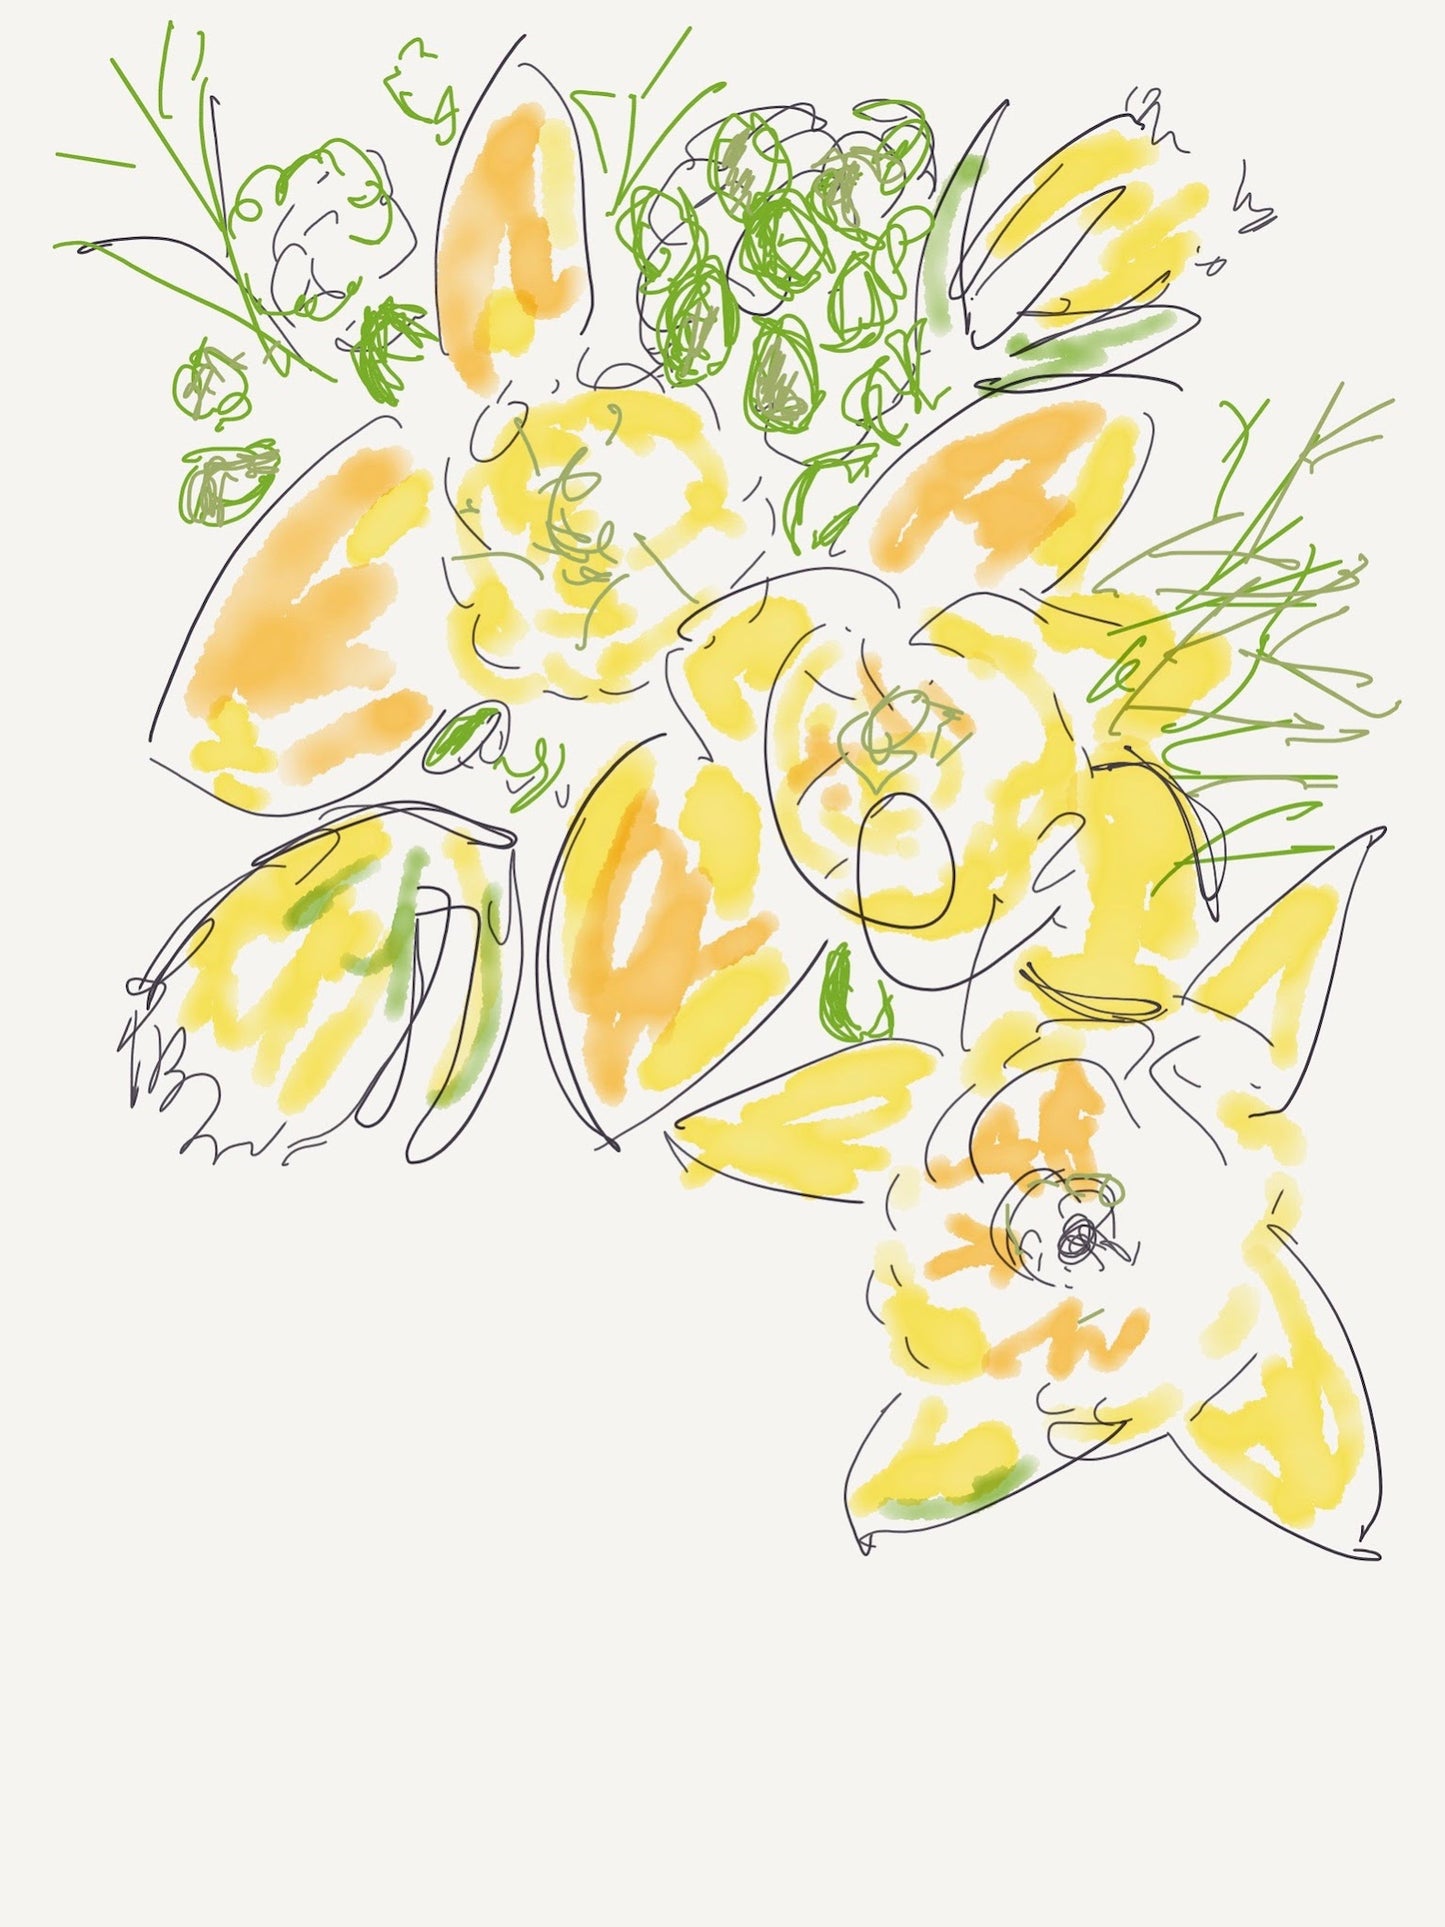 Daffodil bunches